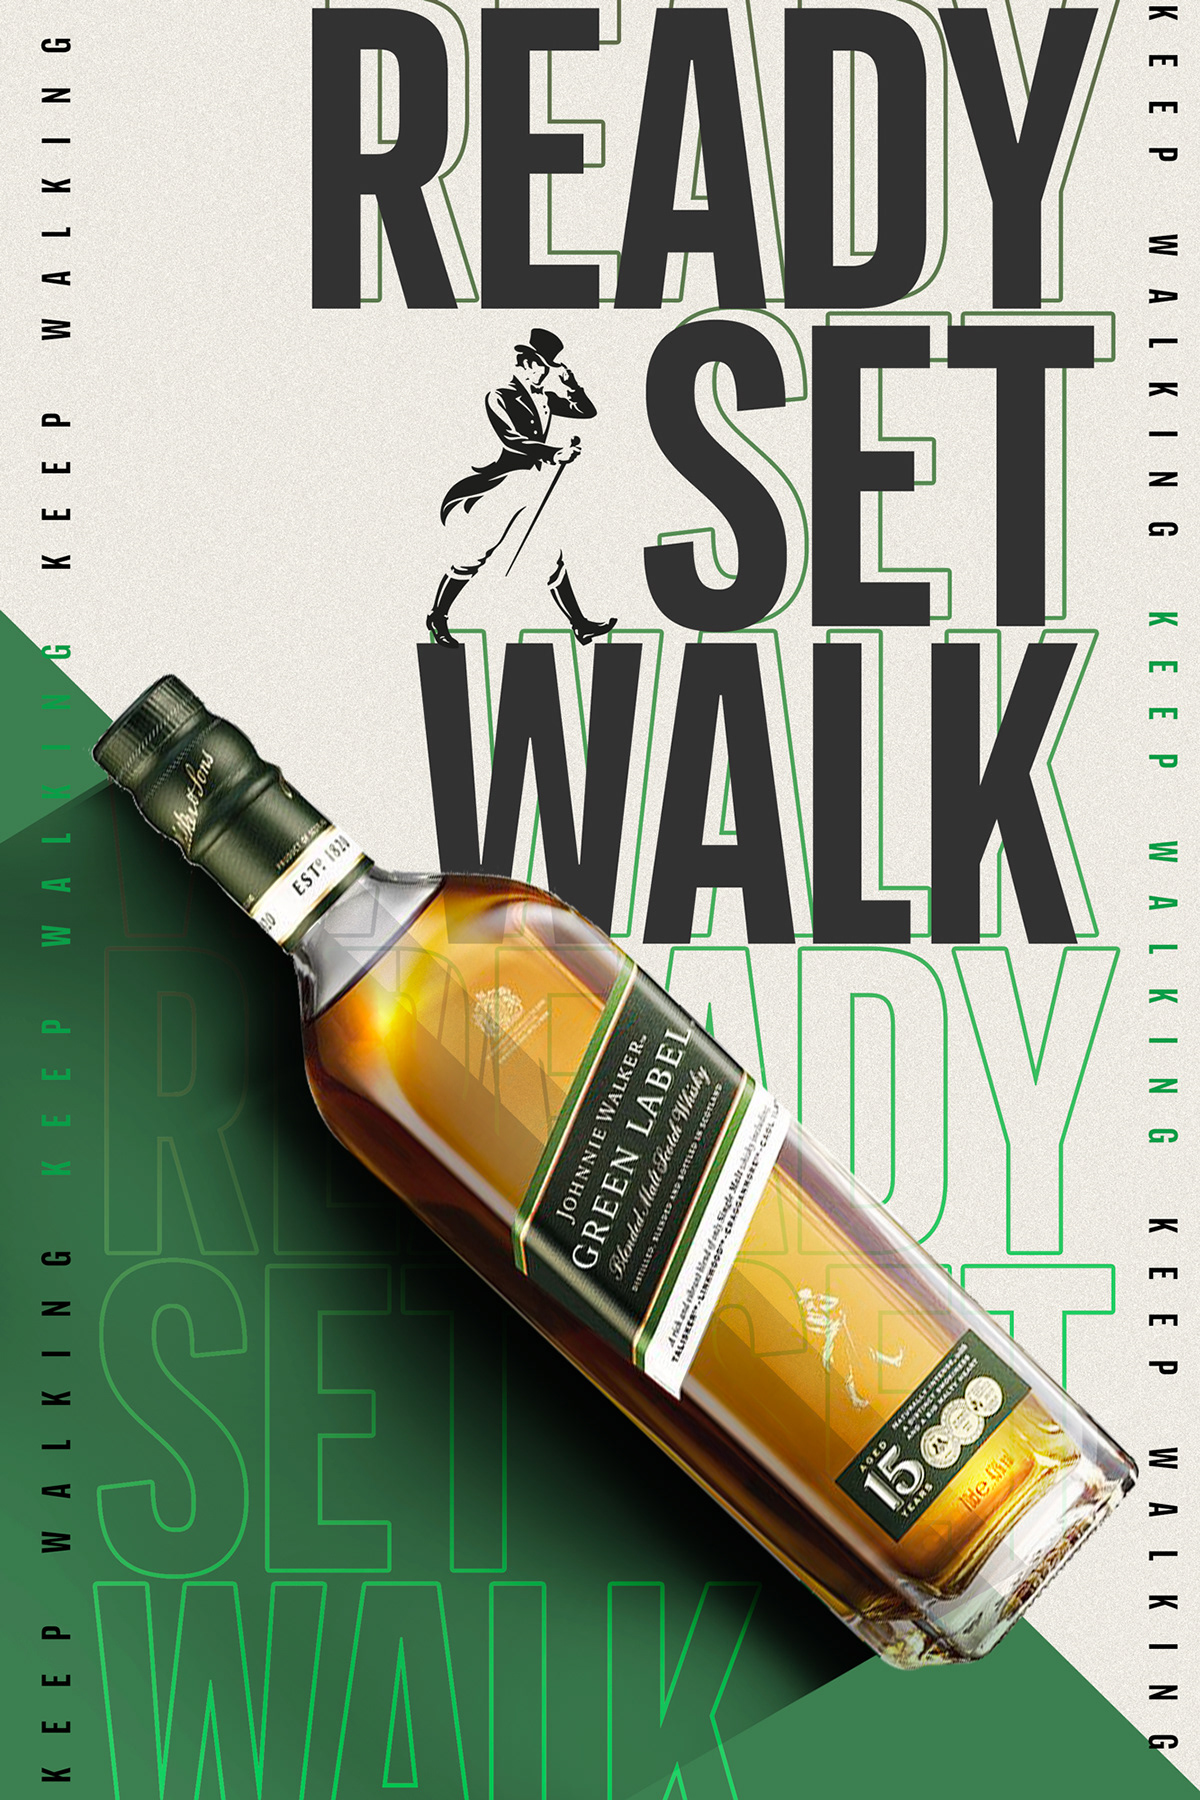 alcohol bottle diageo drink Johnnie Walker ready set walk Whisky